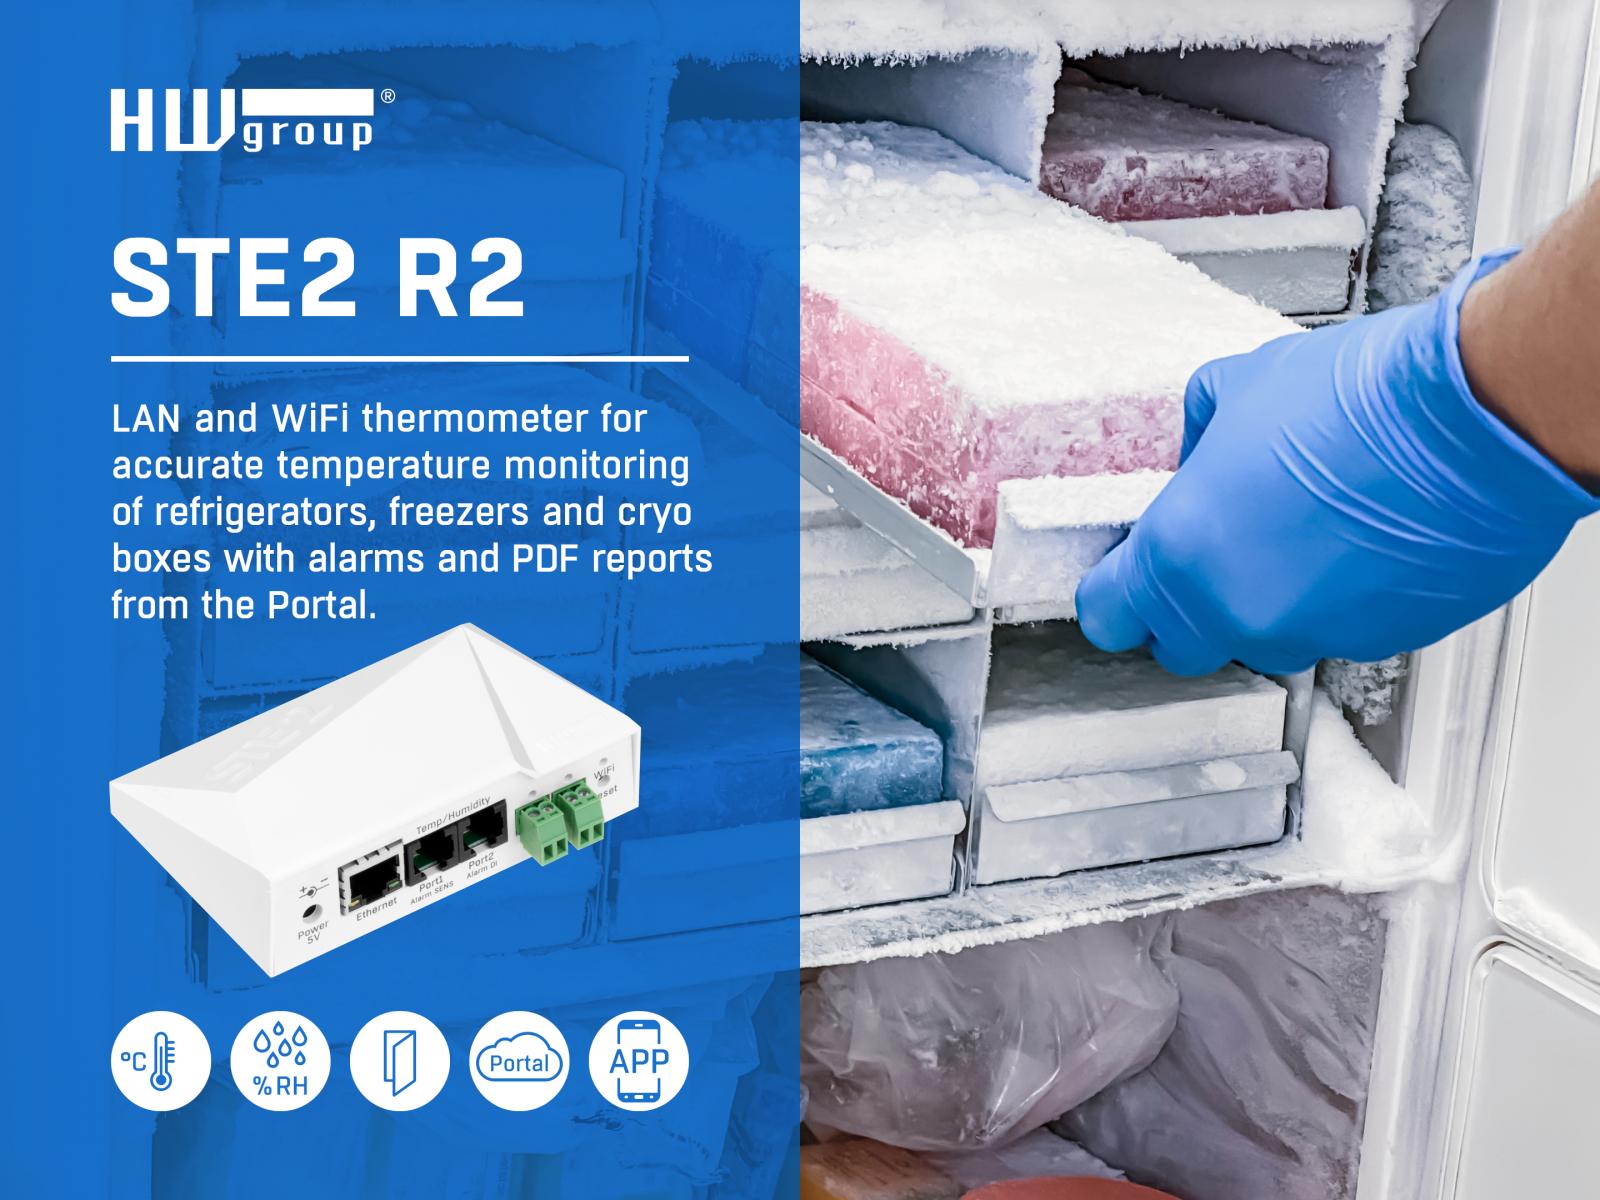 WiFi Remote Medical refrigerator temperature monitoring